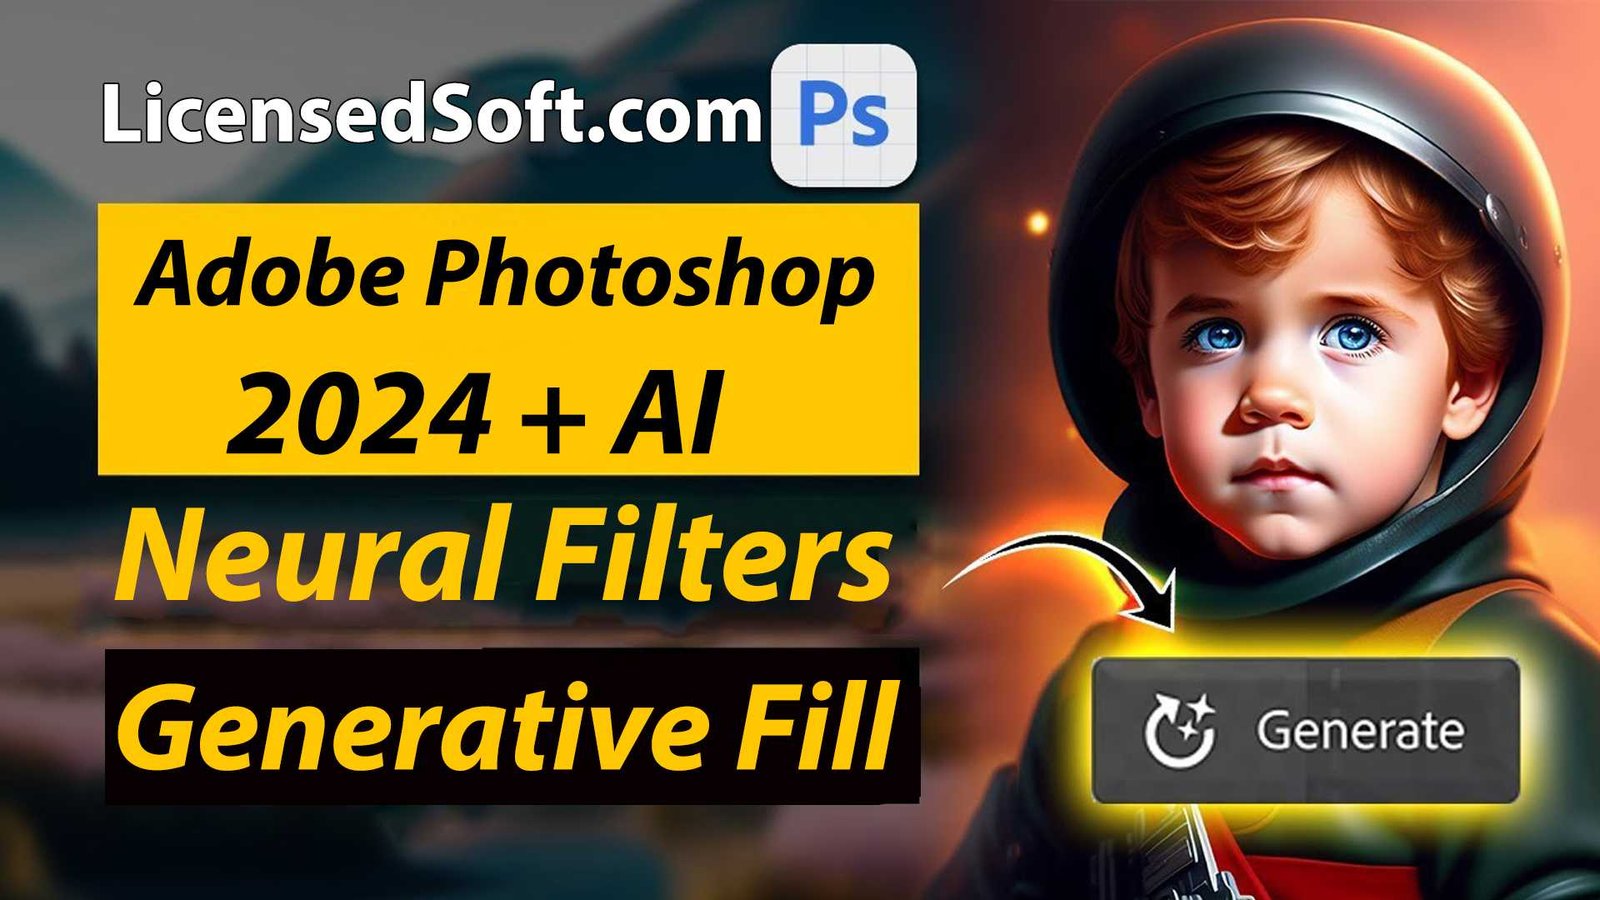 Adobe Photoshop 2024 v25.0 + Neural Filters Cover Image By LicensedSoft